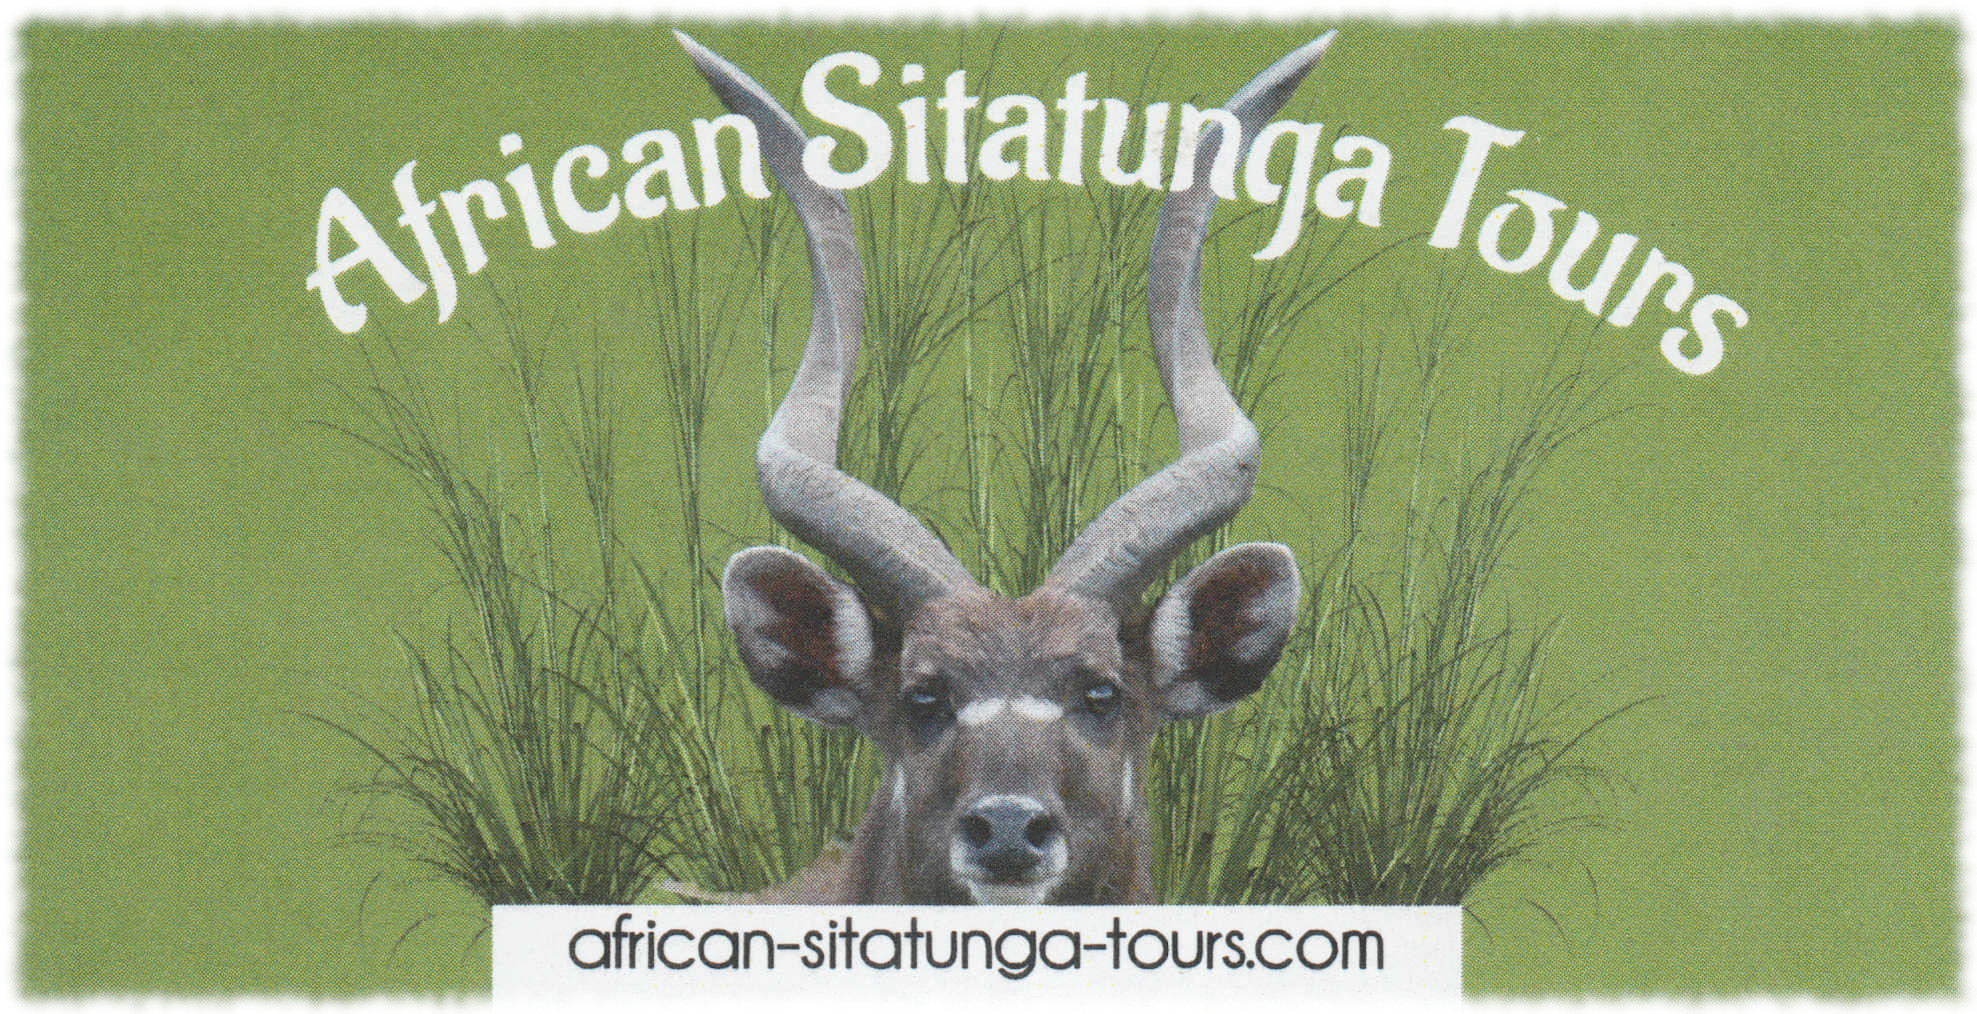 African-Sitatunga-Tours